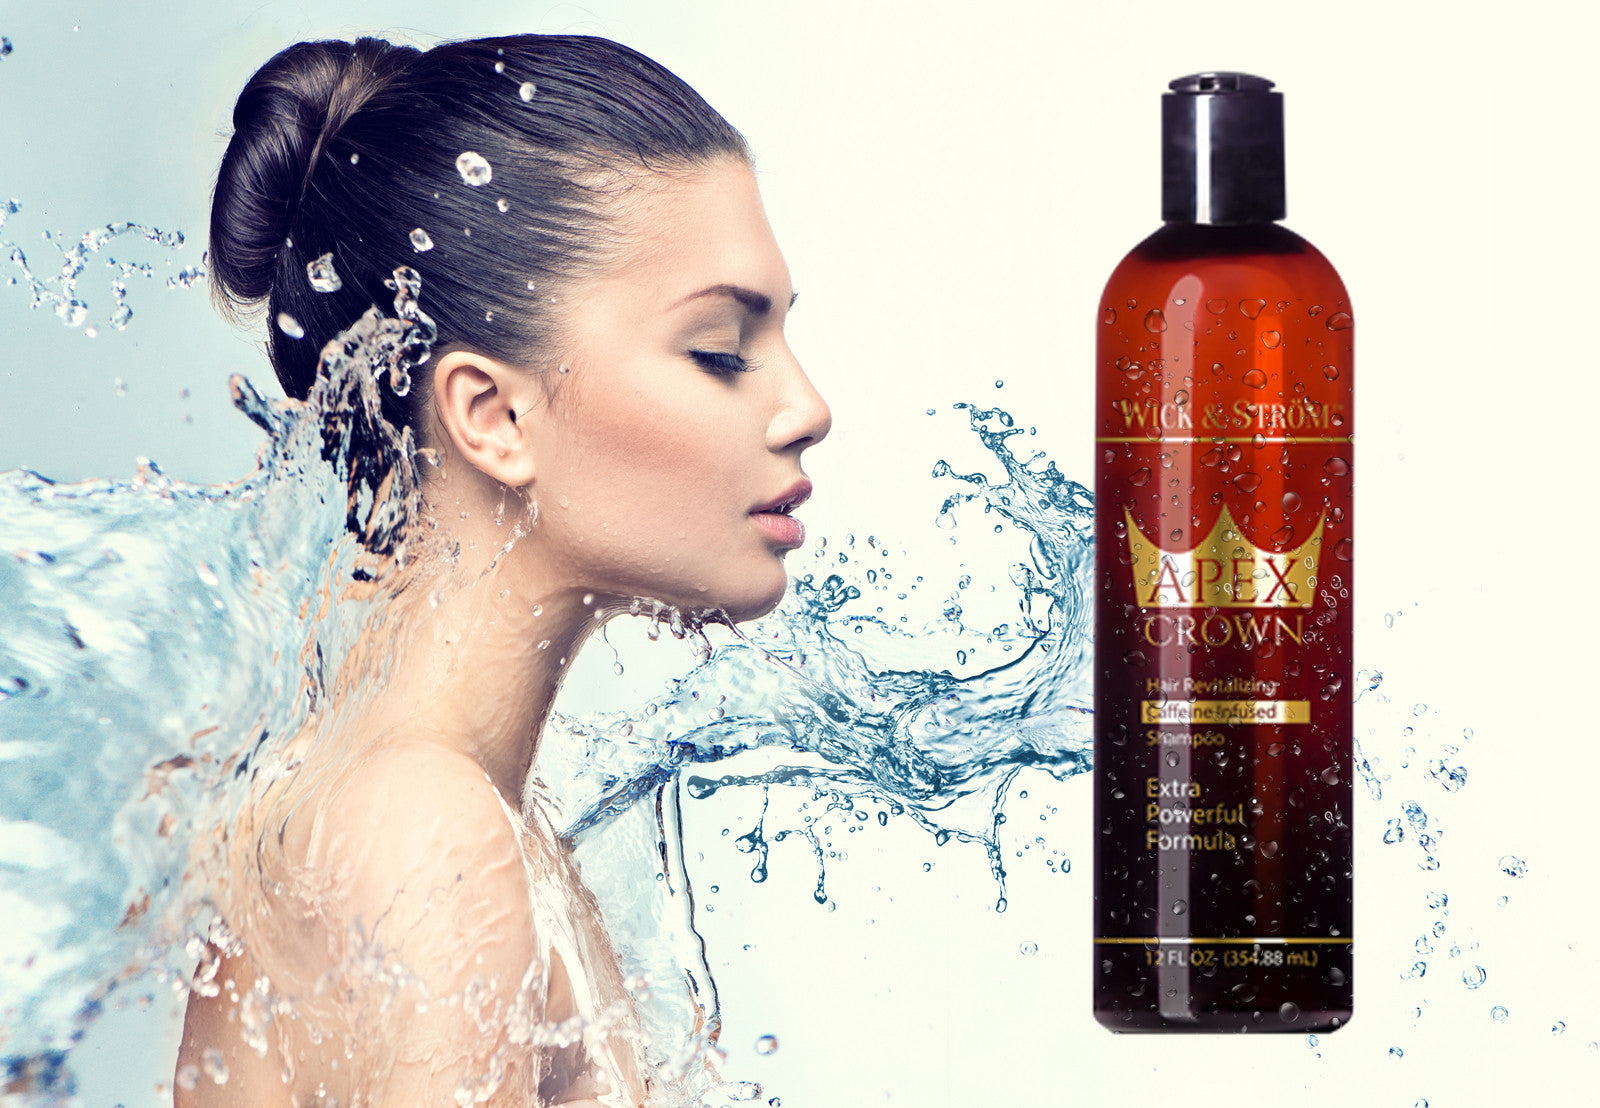 Wick & Ström - Premium Apex Crown Shampoo - 12 ounces